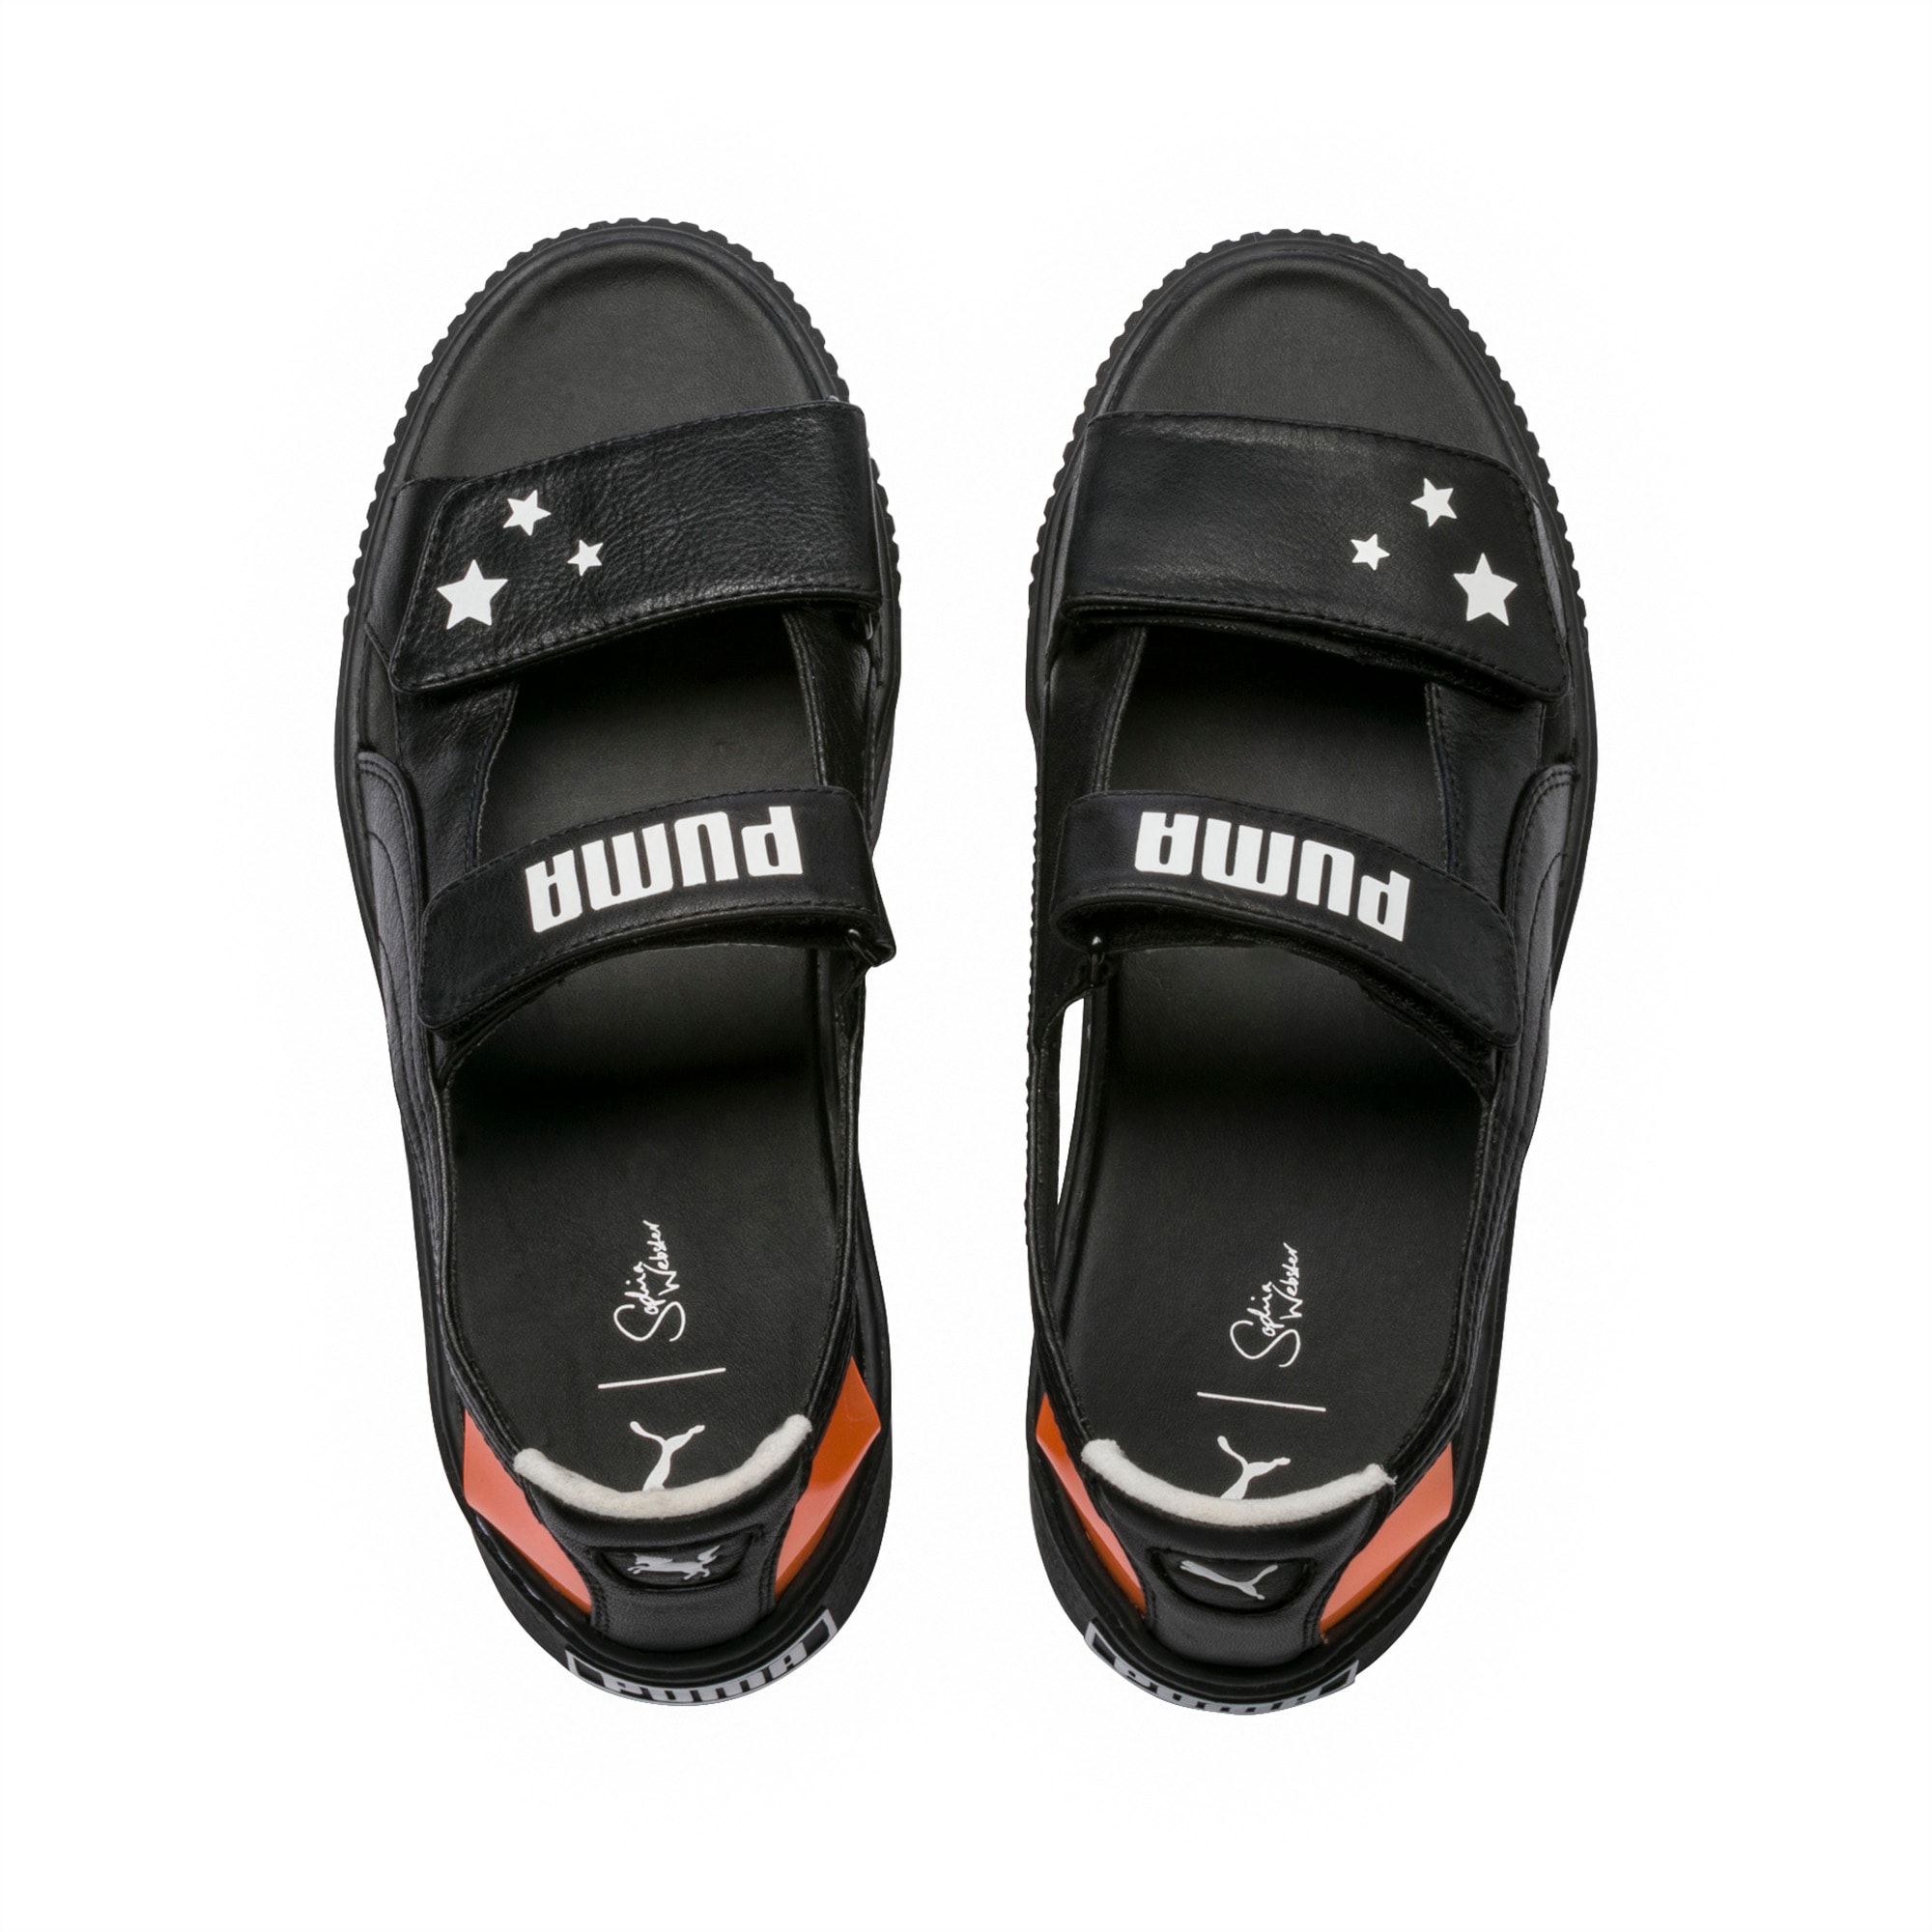 puma sophia webster sandals